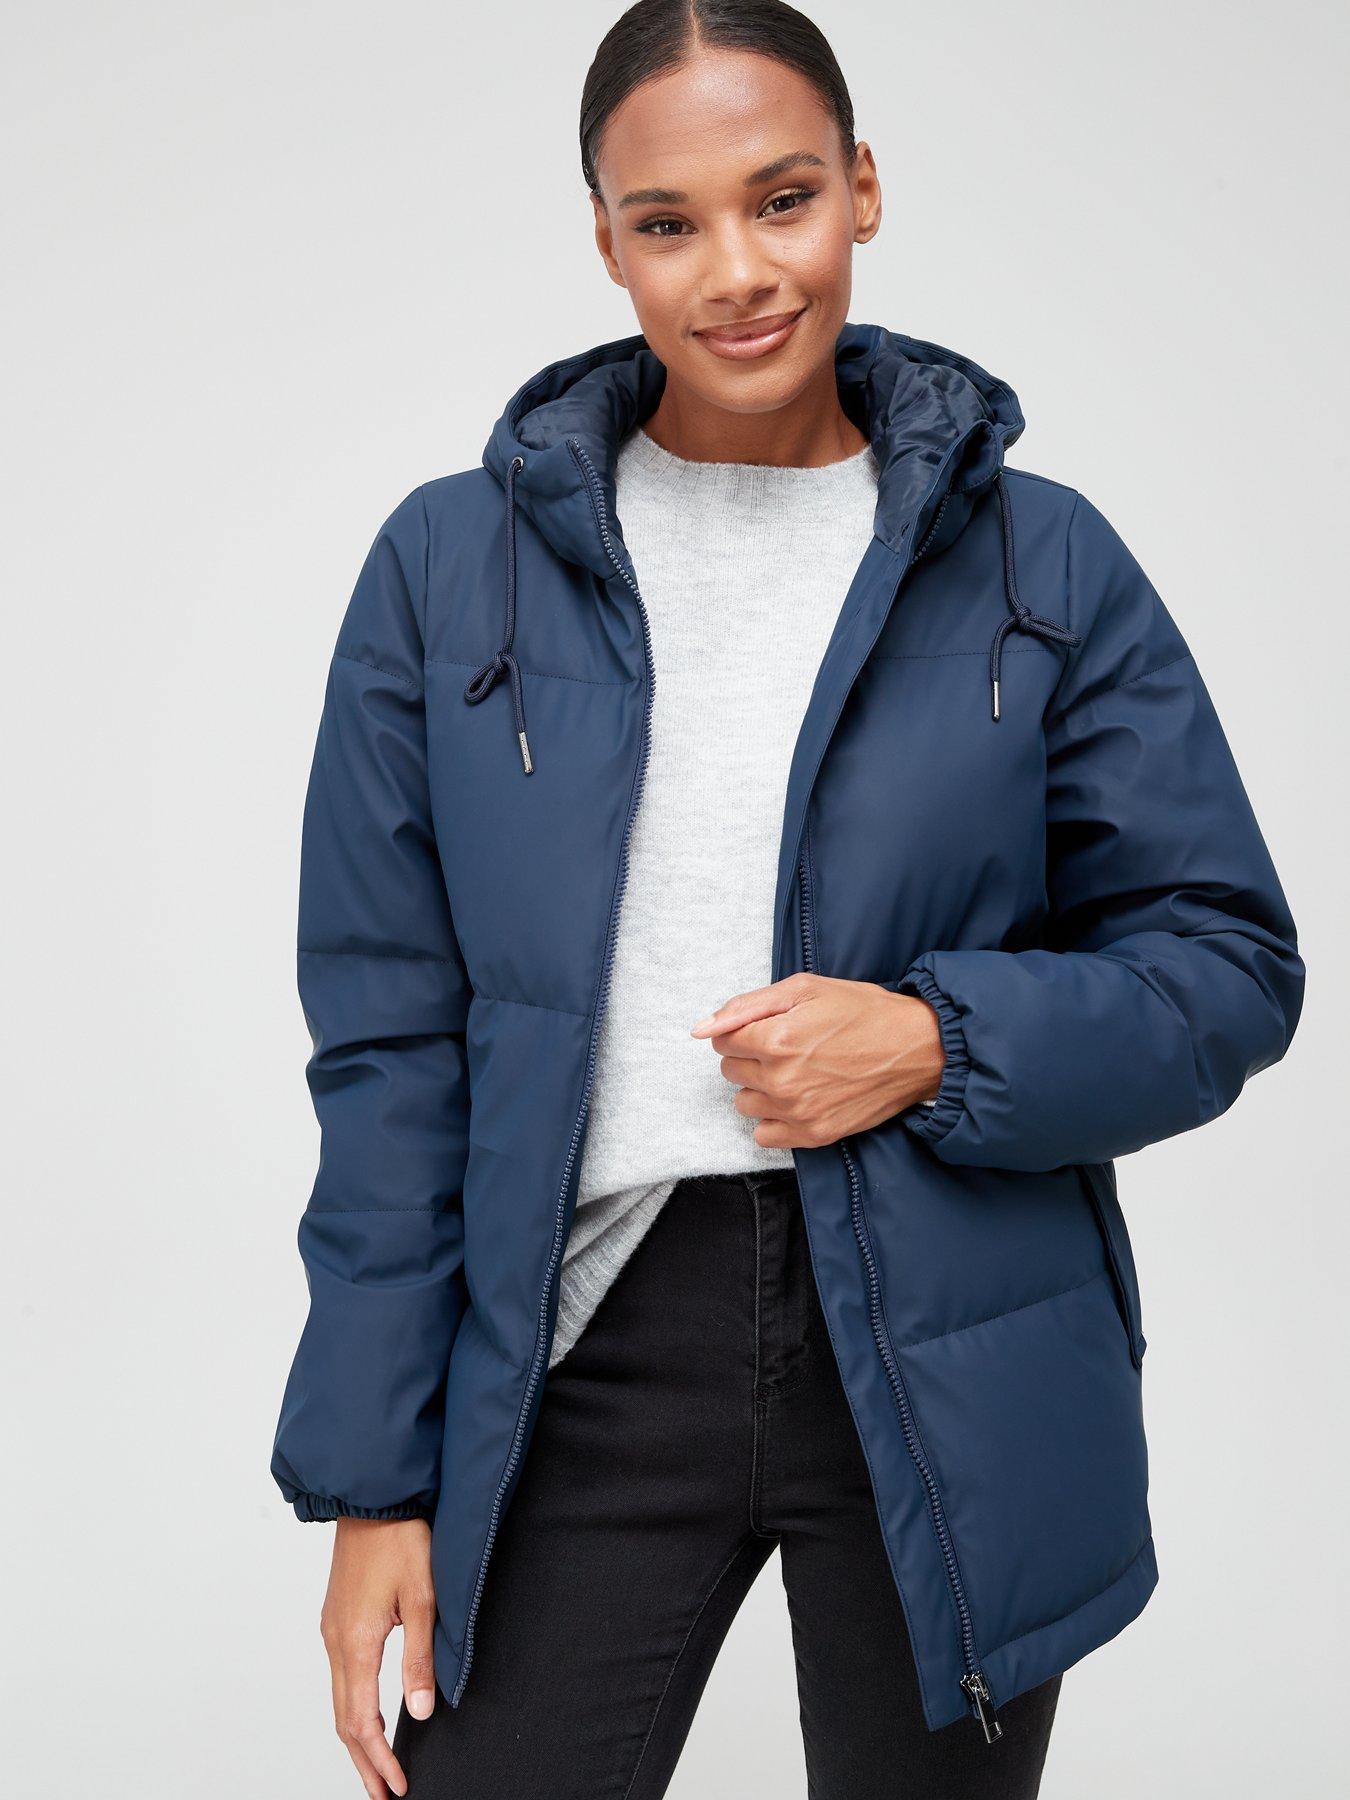 WOMEN FASHION Jackets Vest Sports Navy Blue M New zealand auckland vest discount 64% 